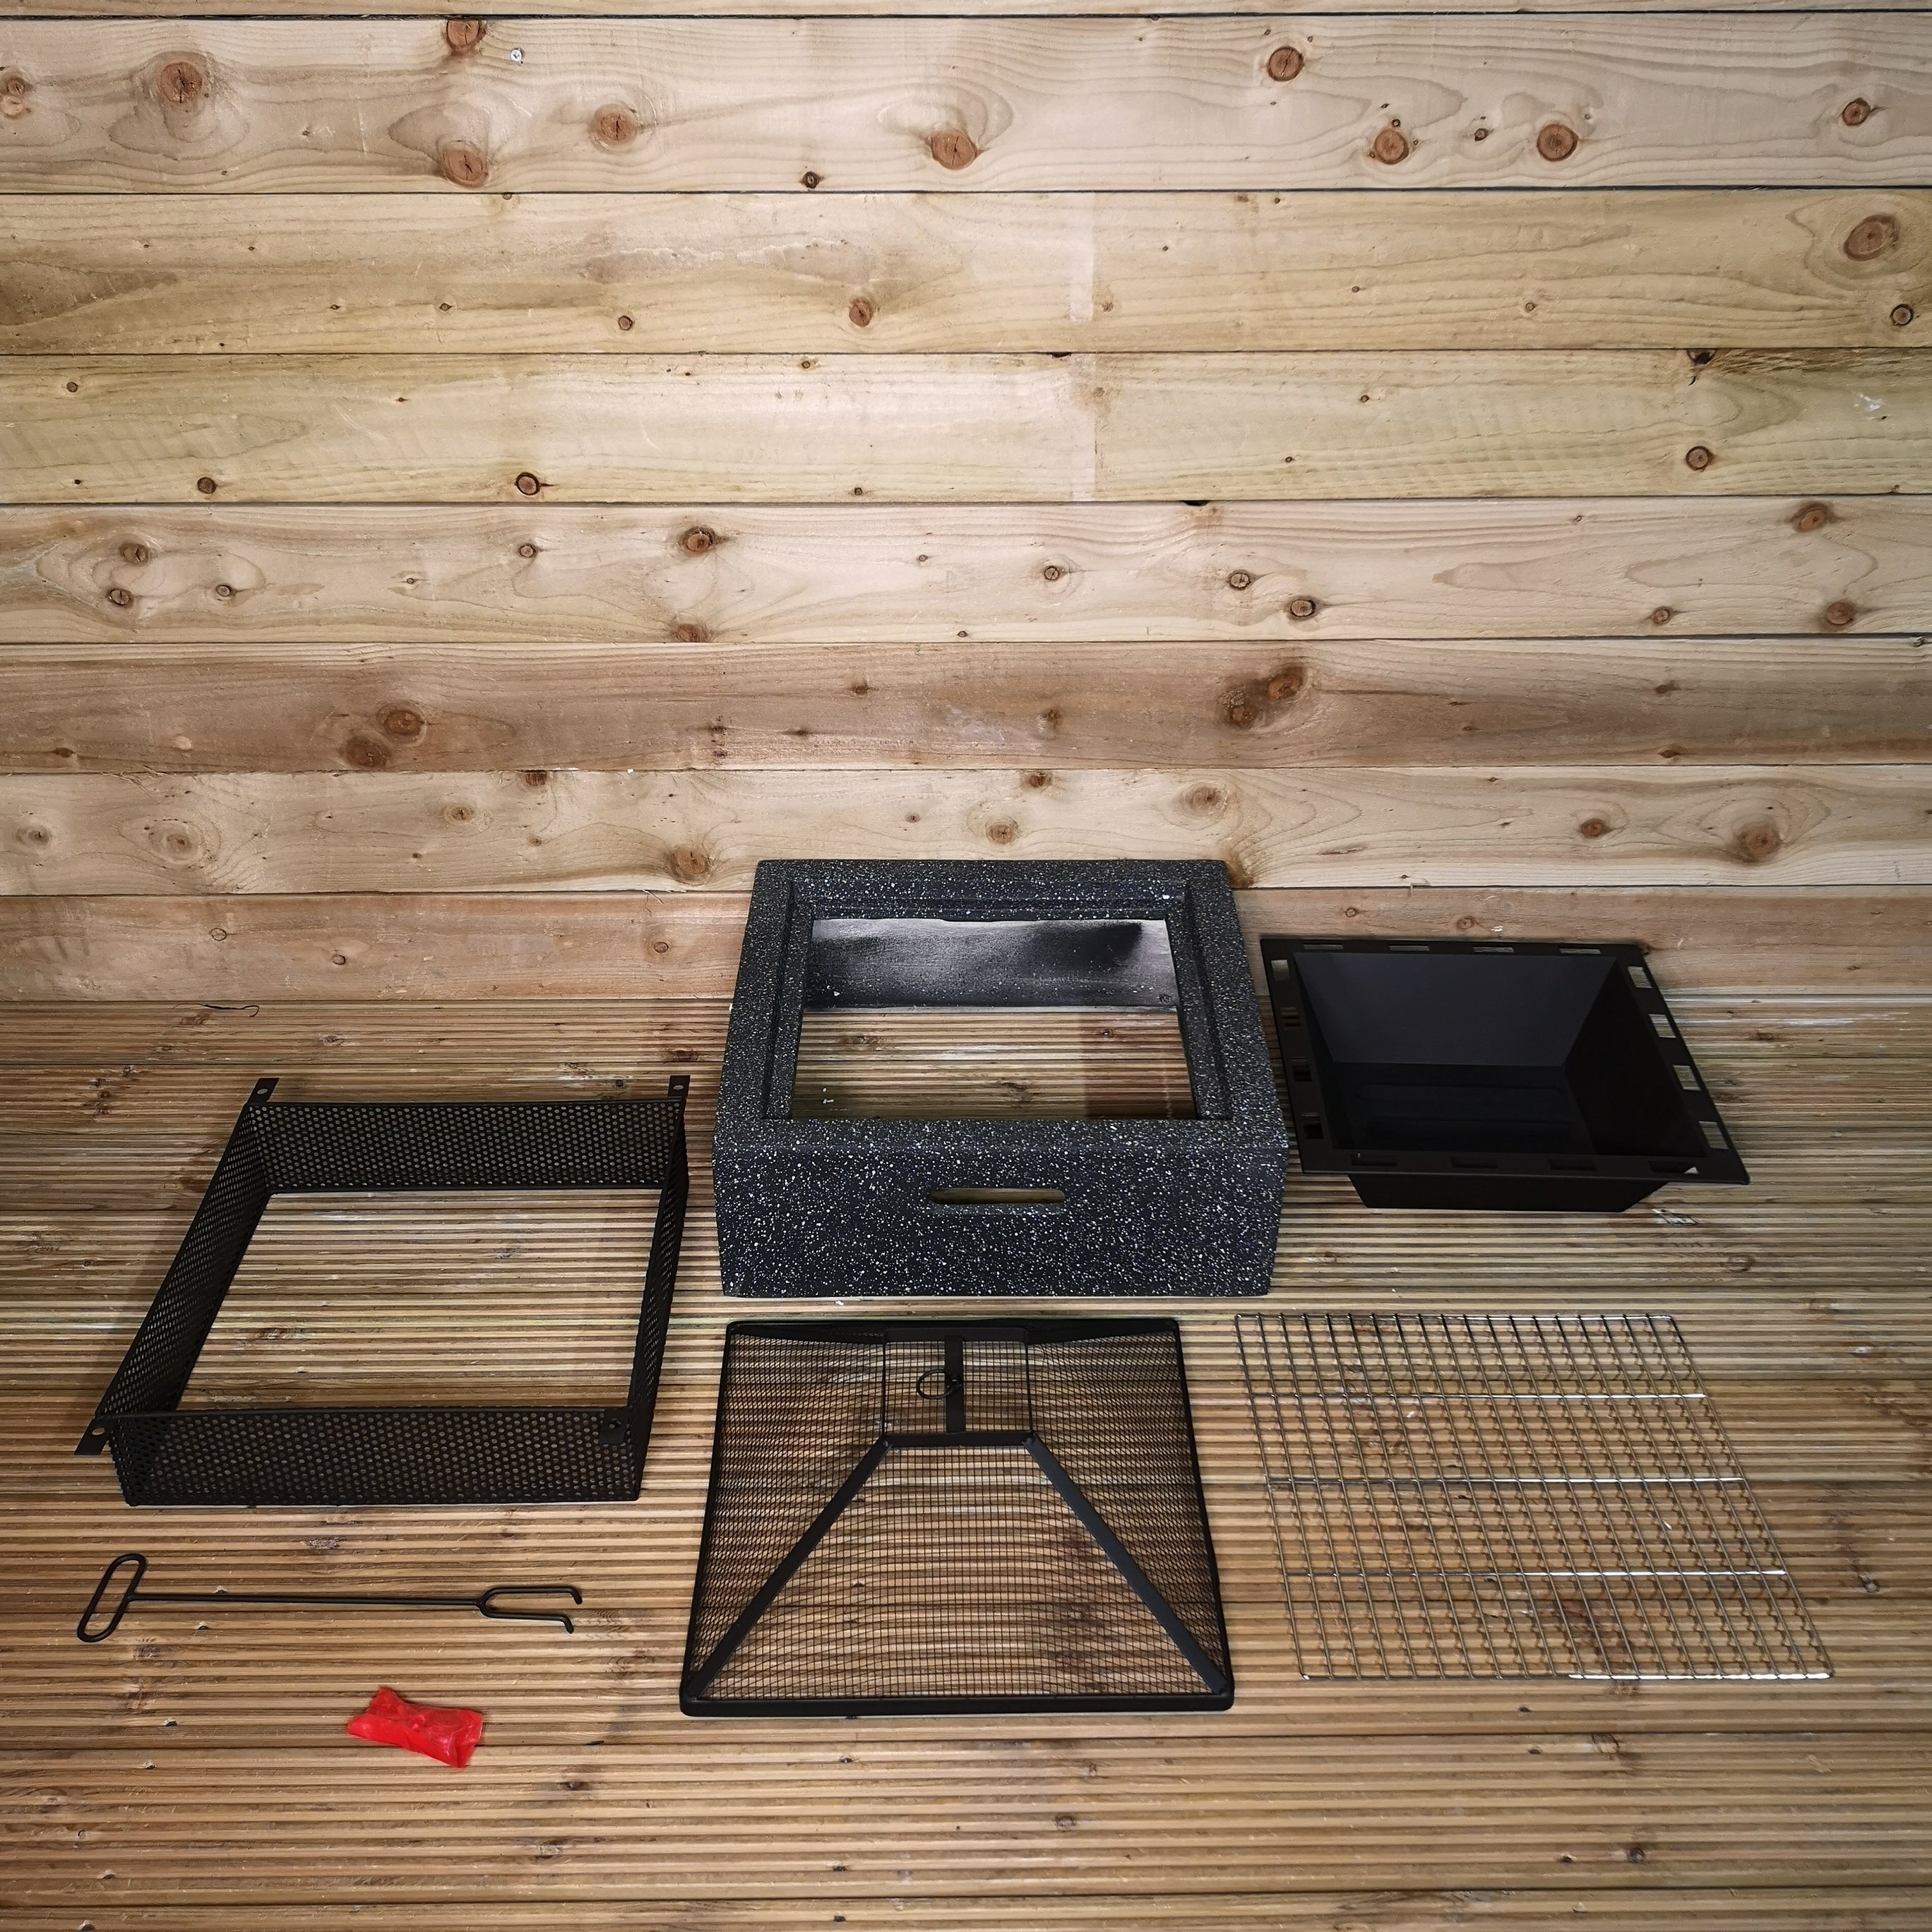 52cm Luxury Concrete Effect Garden Fire Pit & BBQ Grill Heater Outdoor Log Burner